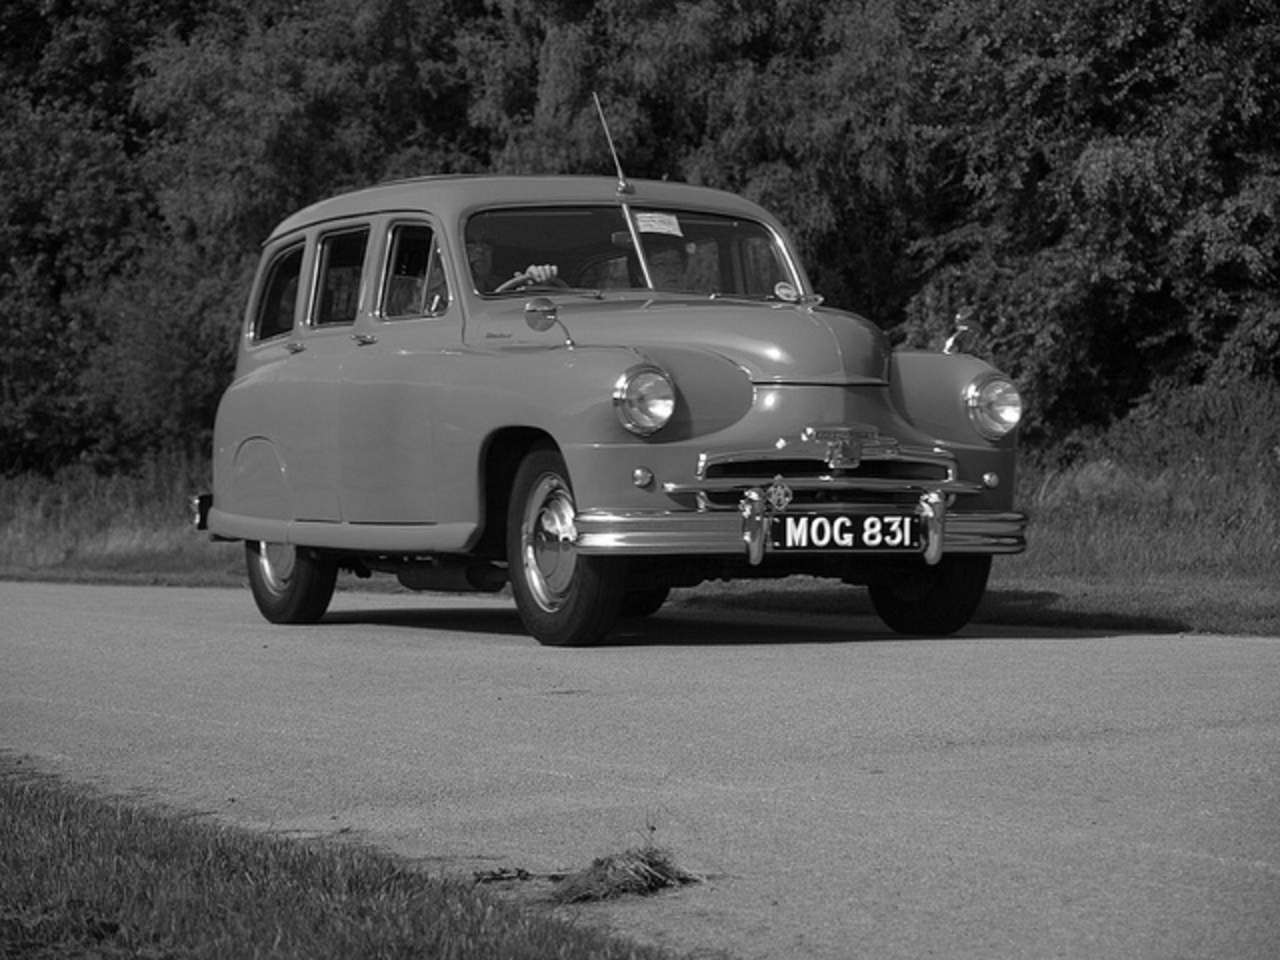 Standard Vanguard Estate Cars - 1952 | Flickr - Photo Sharing!